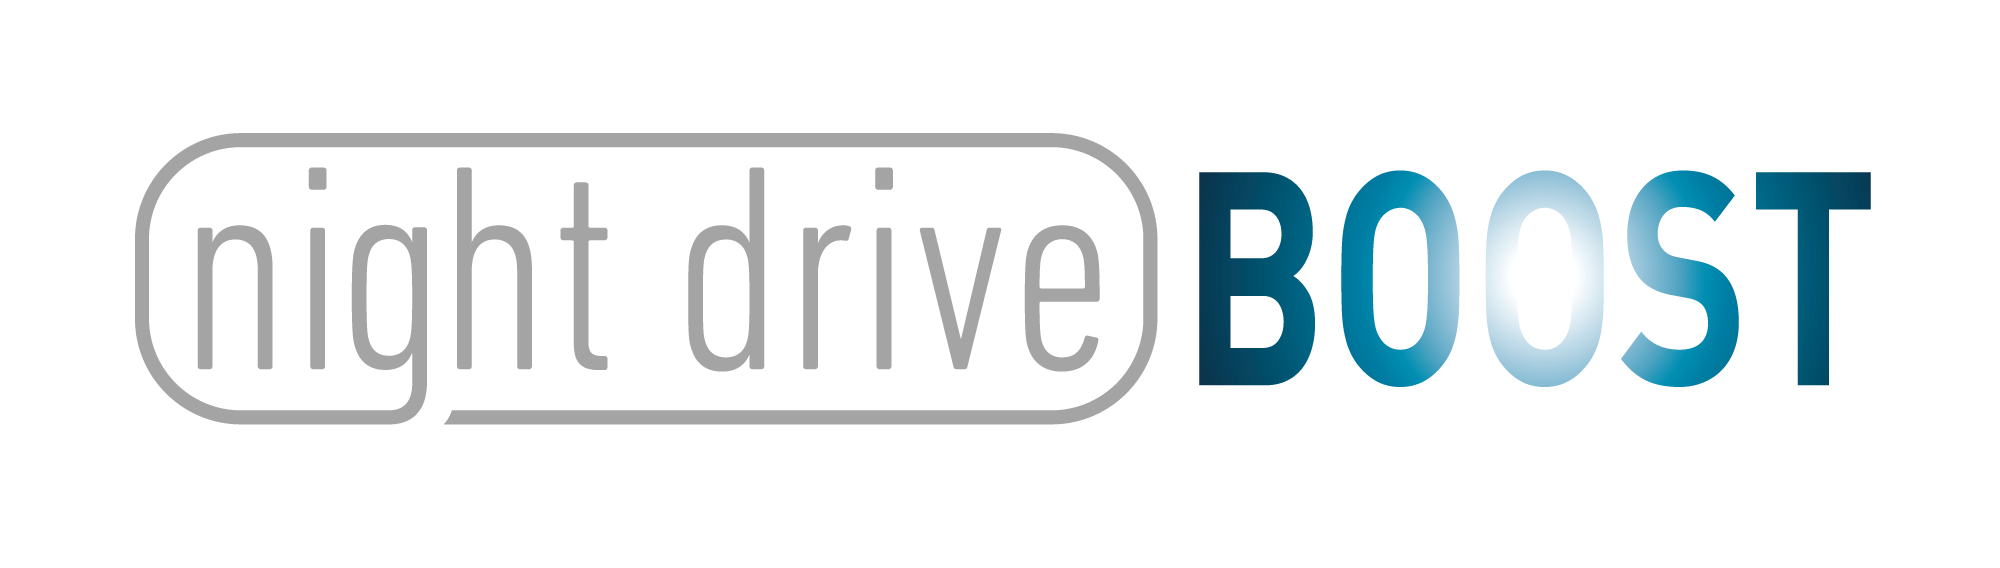 Bbgr Logo - Night Drive Boost